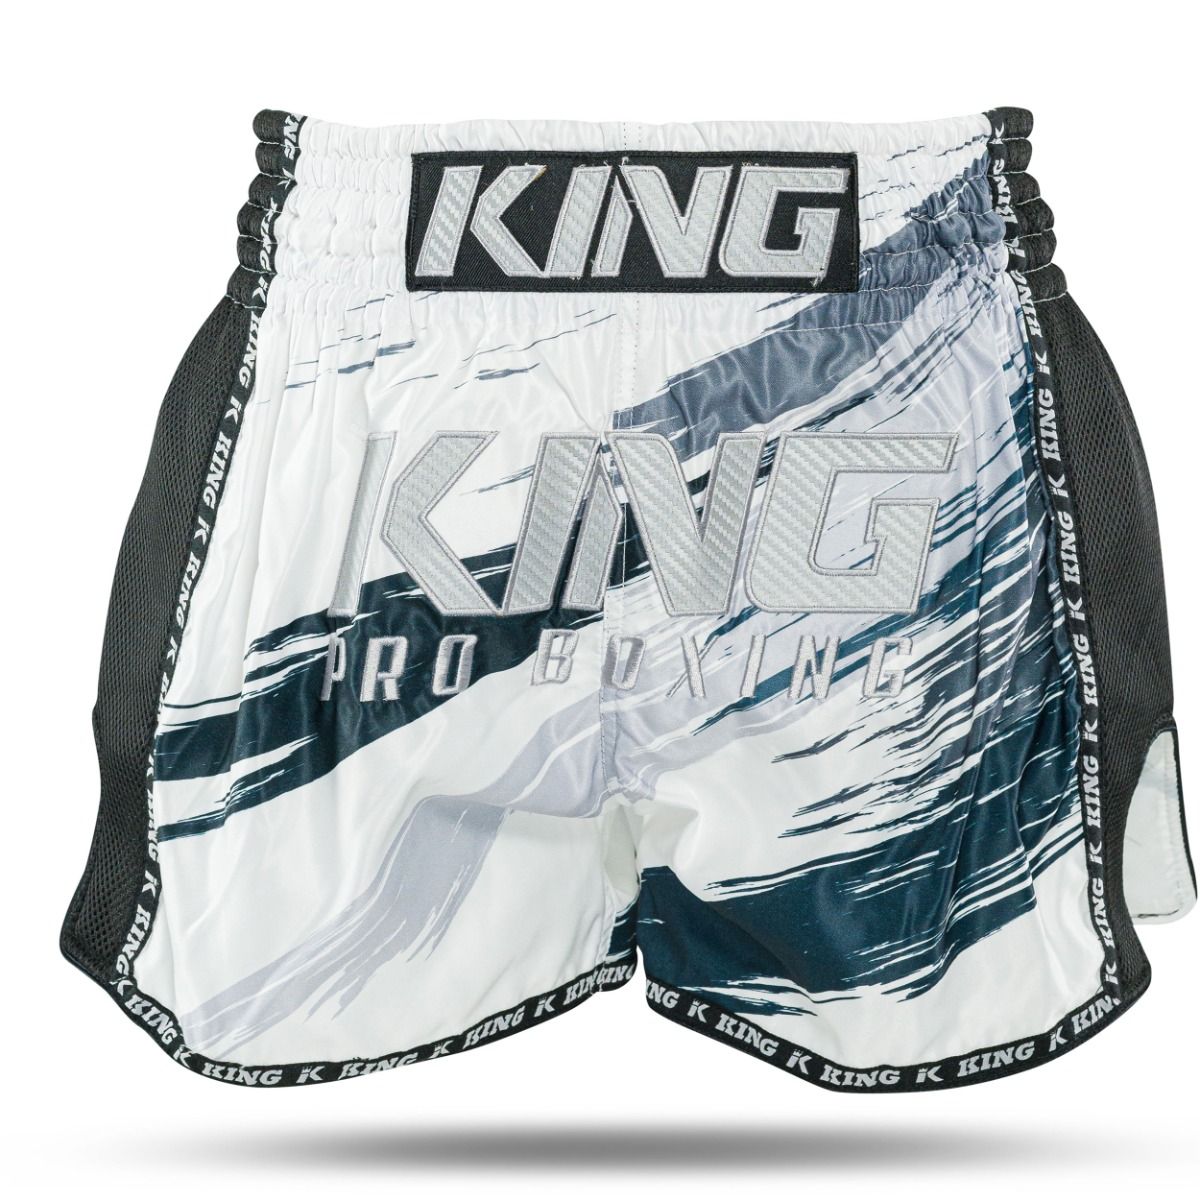 King Pro Boxing - Fightshort - korte broek - STORM 2 - wit - zwart - white - black